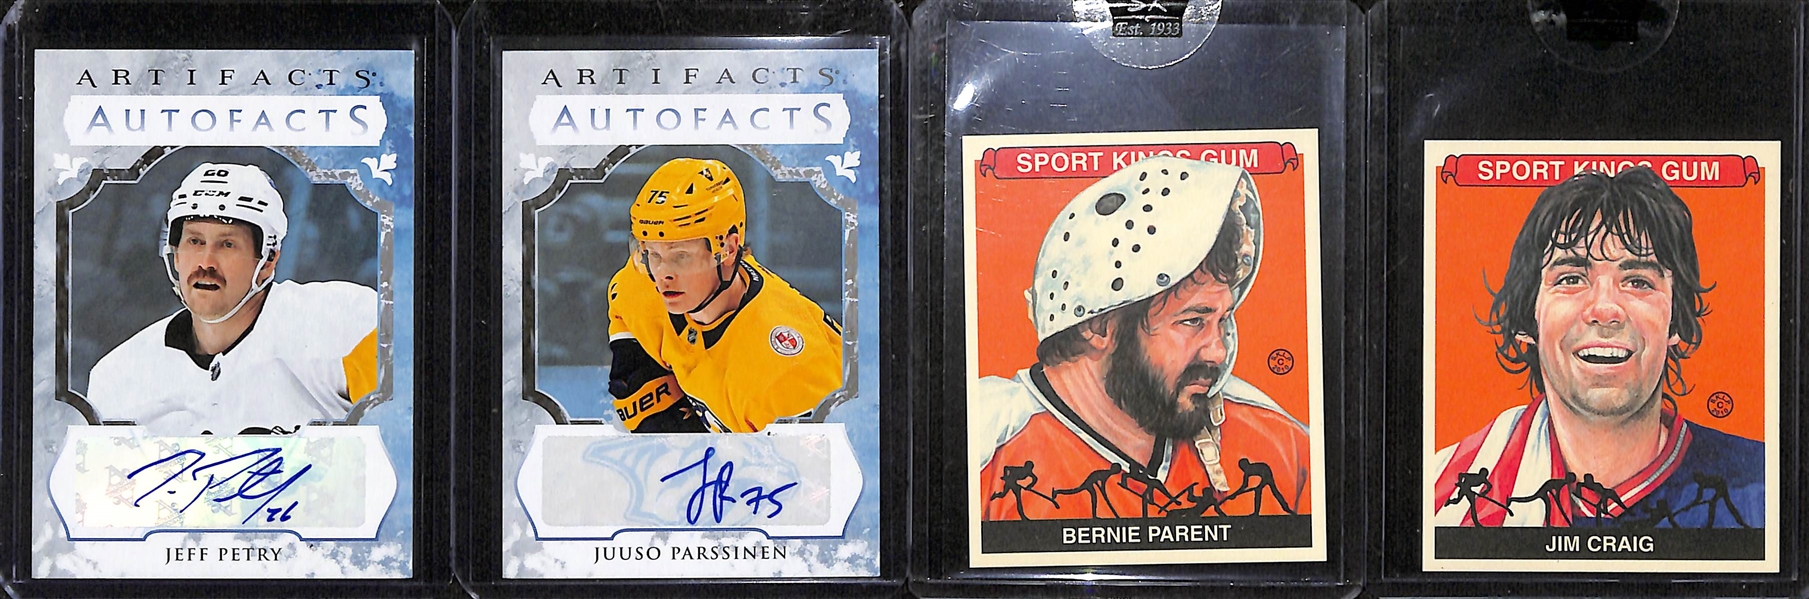 Lot of (55+) Hockey Cards inc. 2023-24 Artifacts Dany Heatley Duel Patch Autograph (#/45), Artifacts Juuso Parssinen Autograph,+